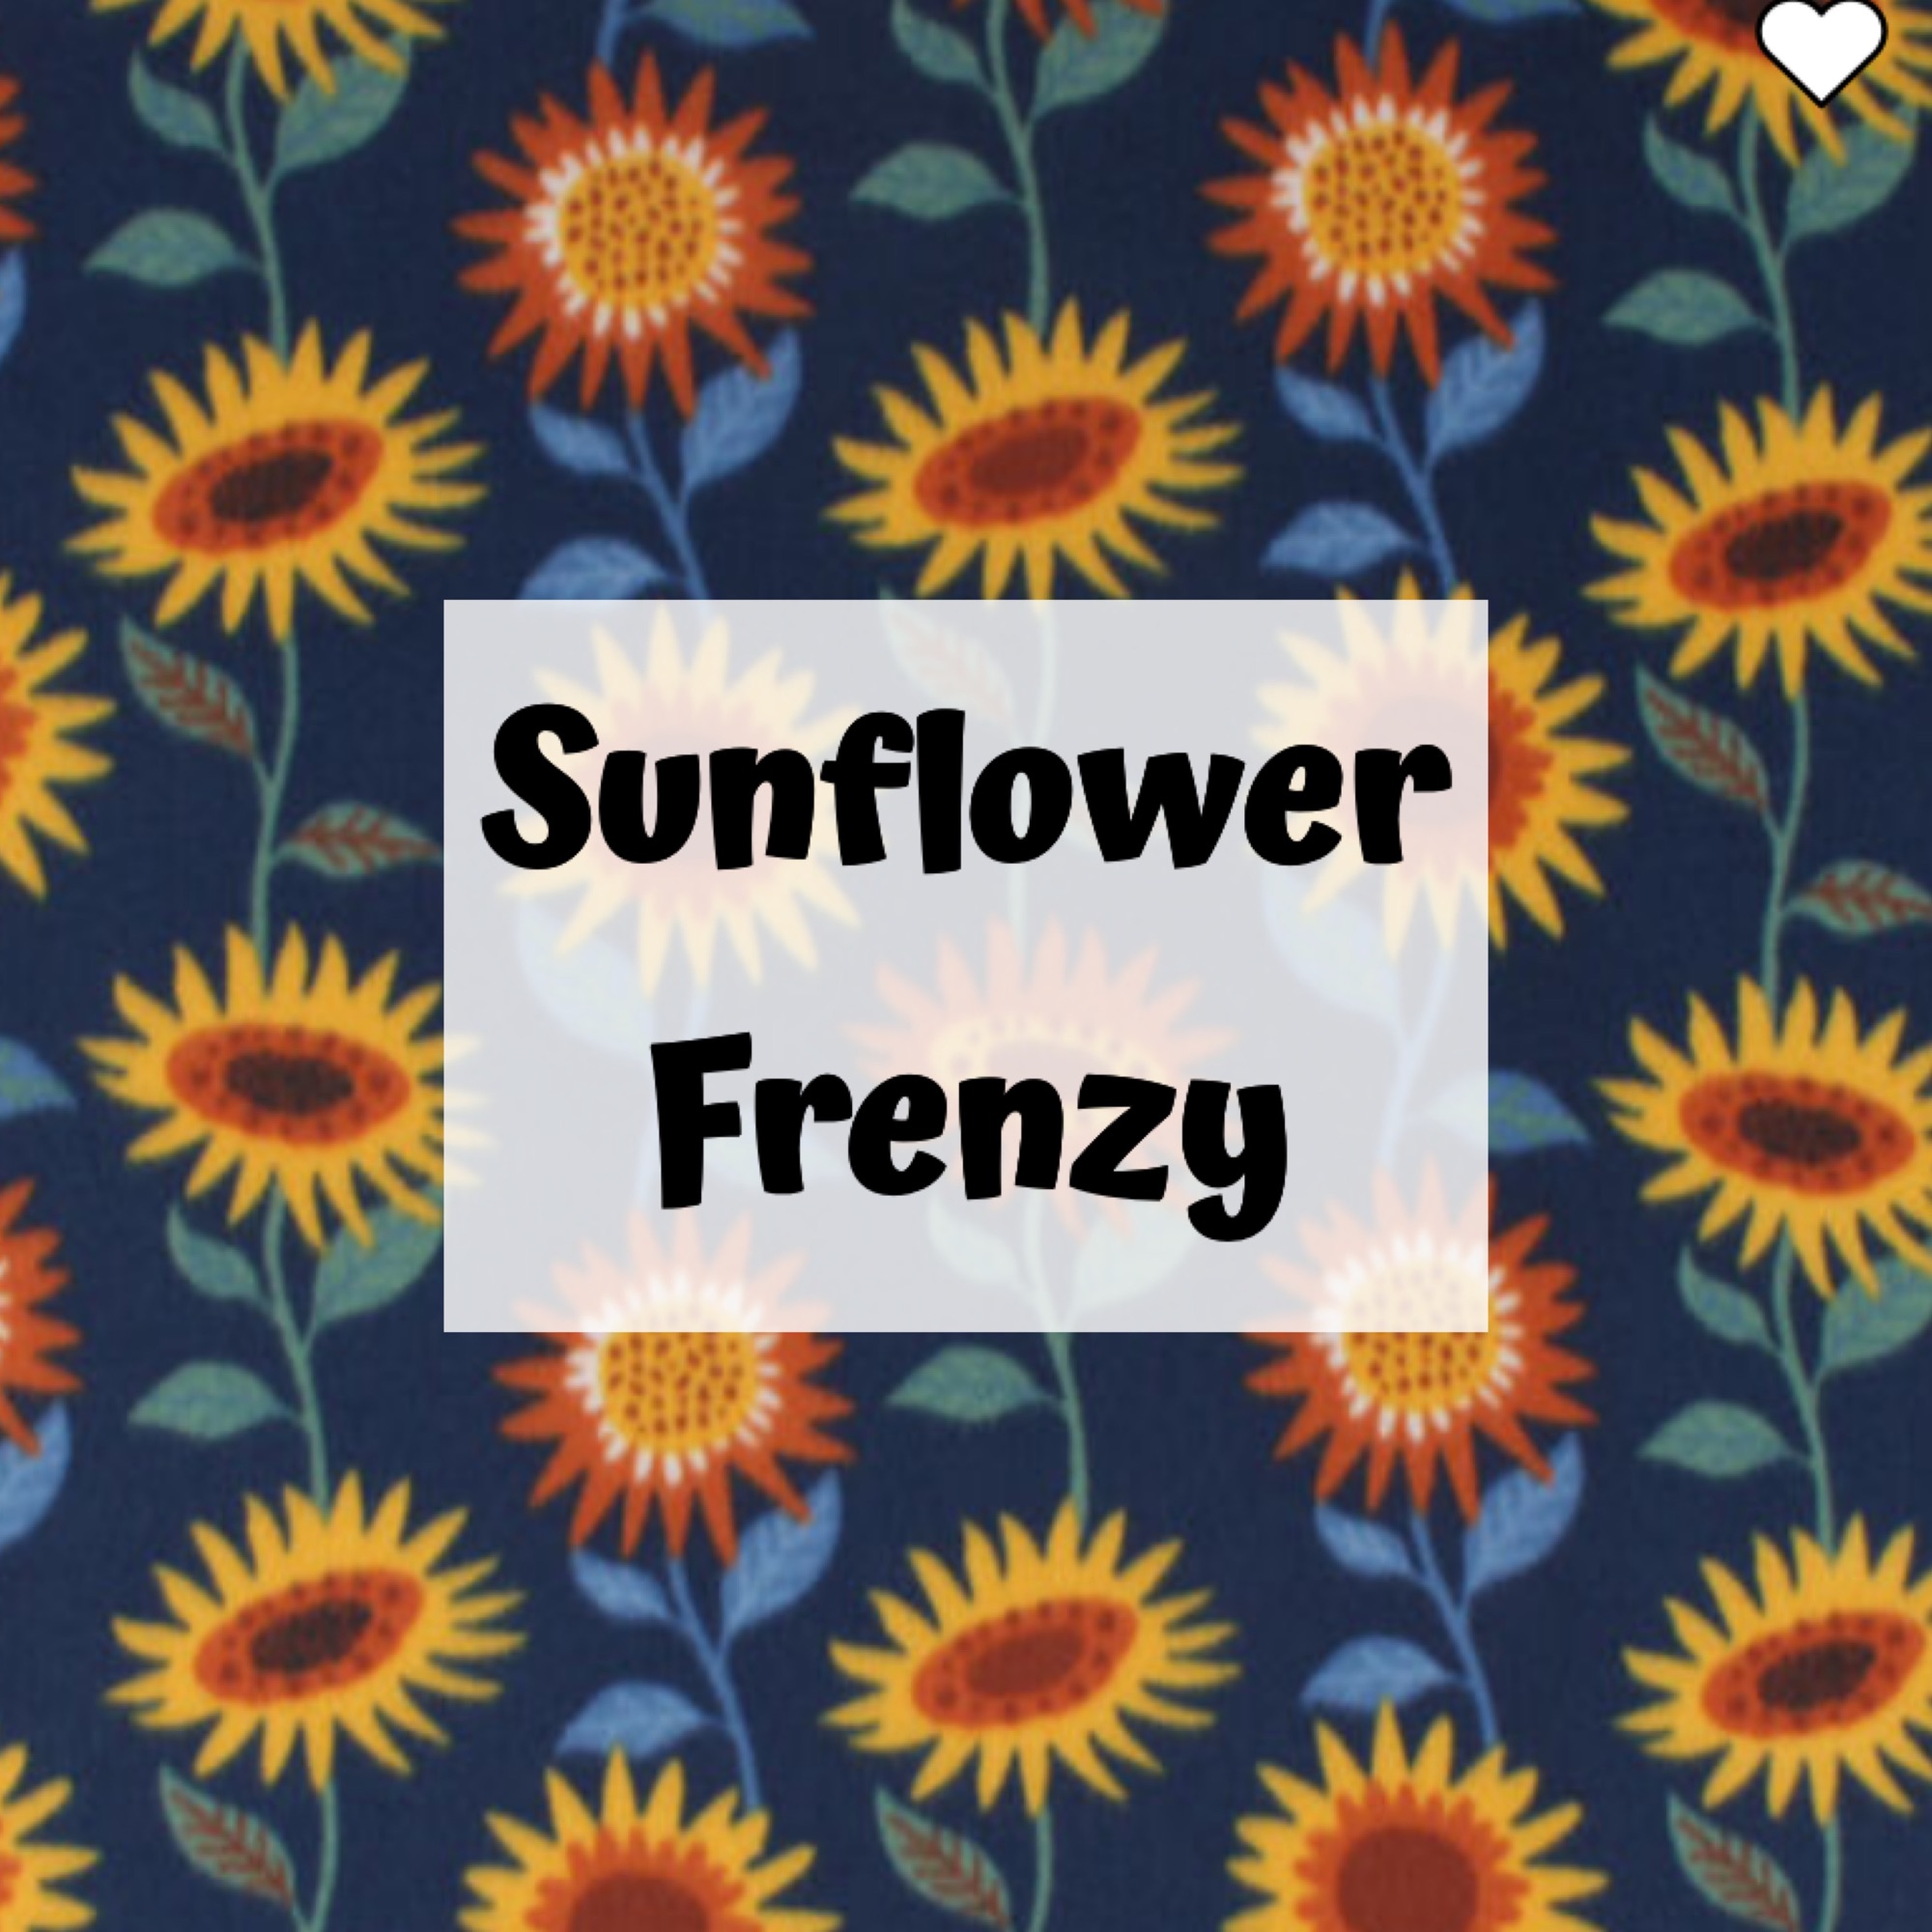 Sunflower Frenzy